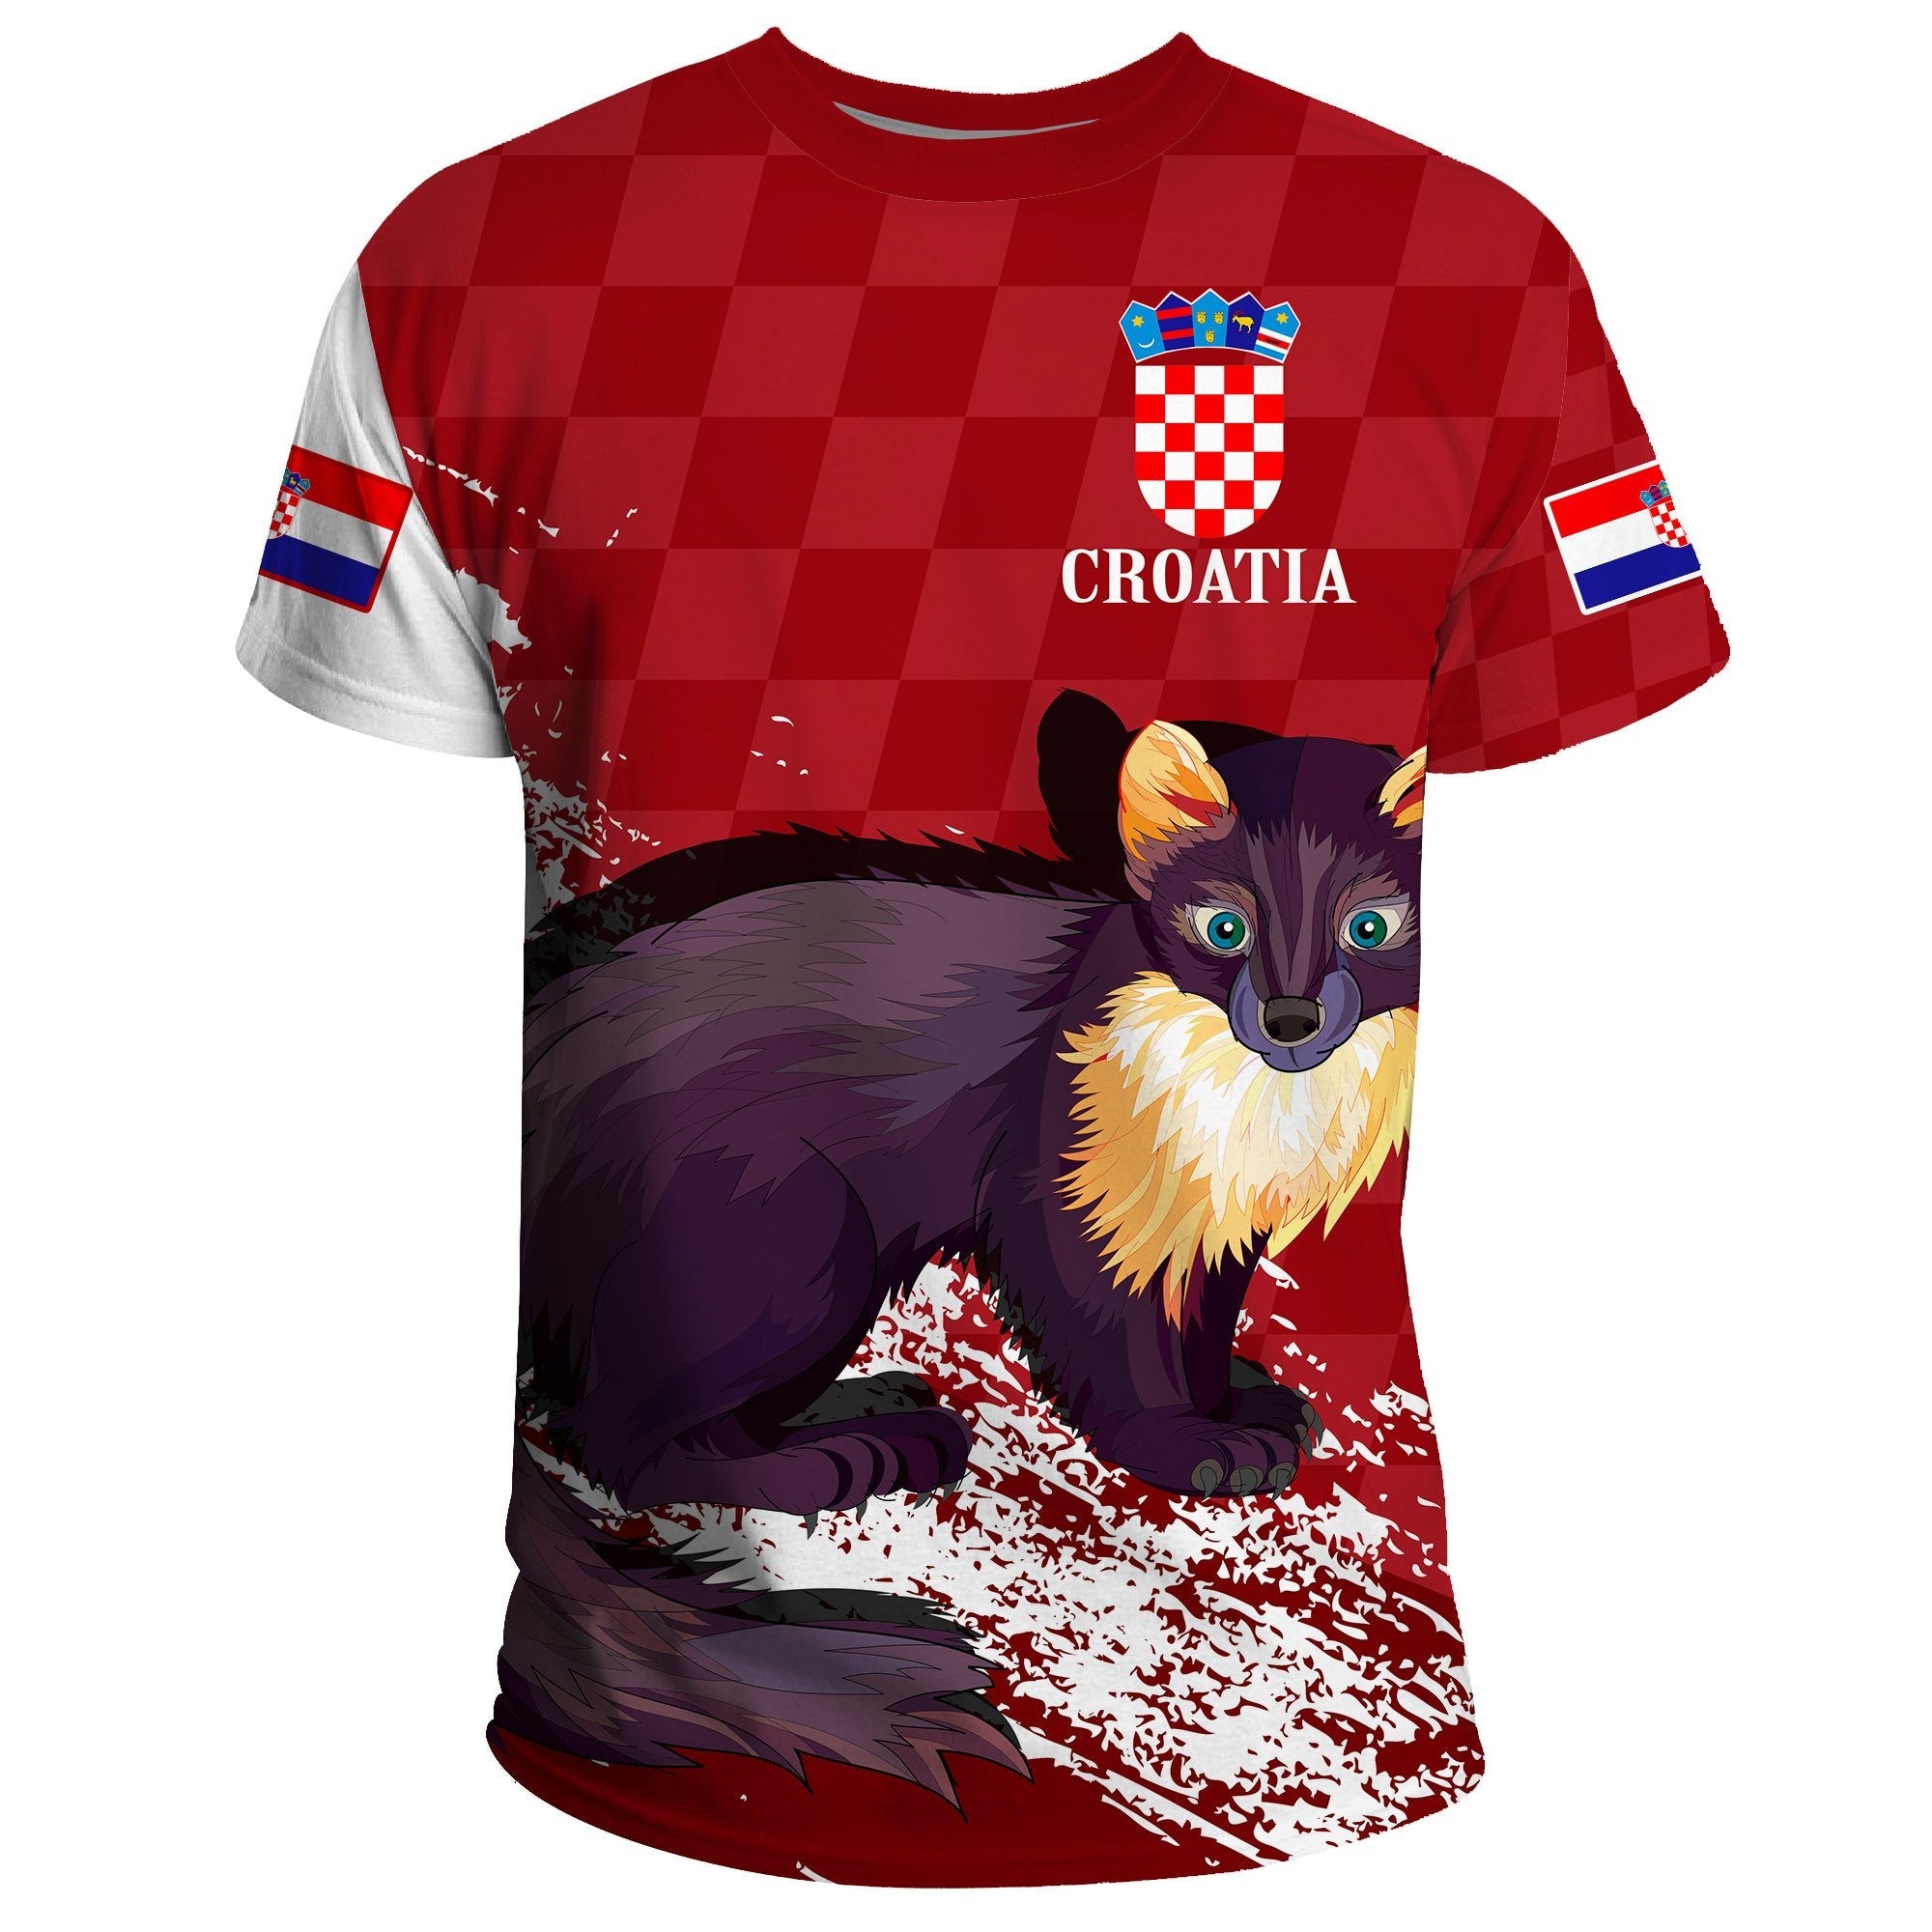 hrvatska-croatia-t-shirt-marten